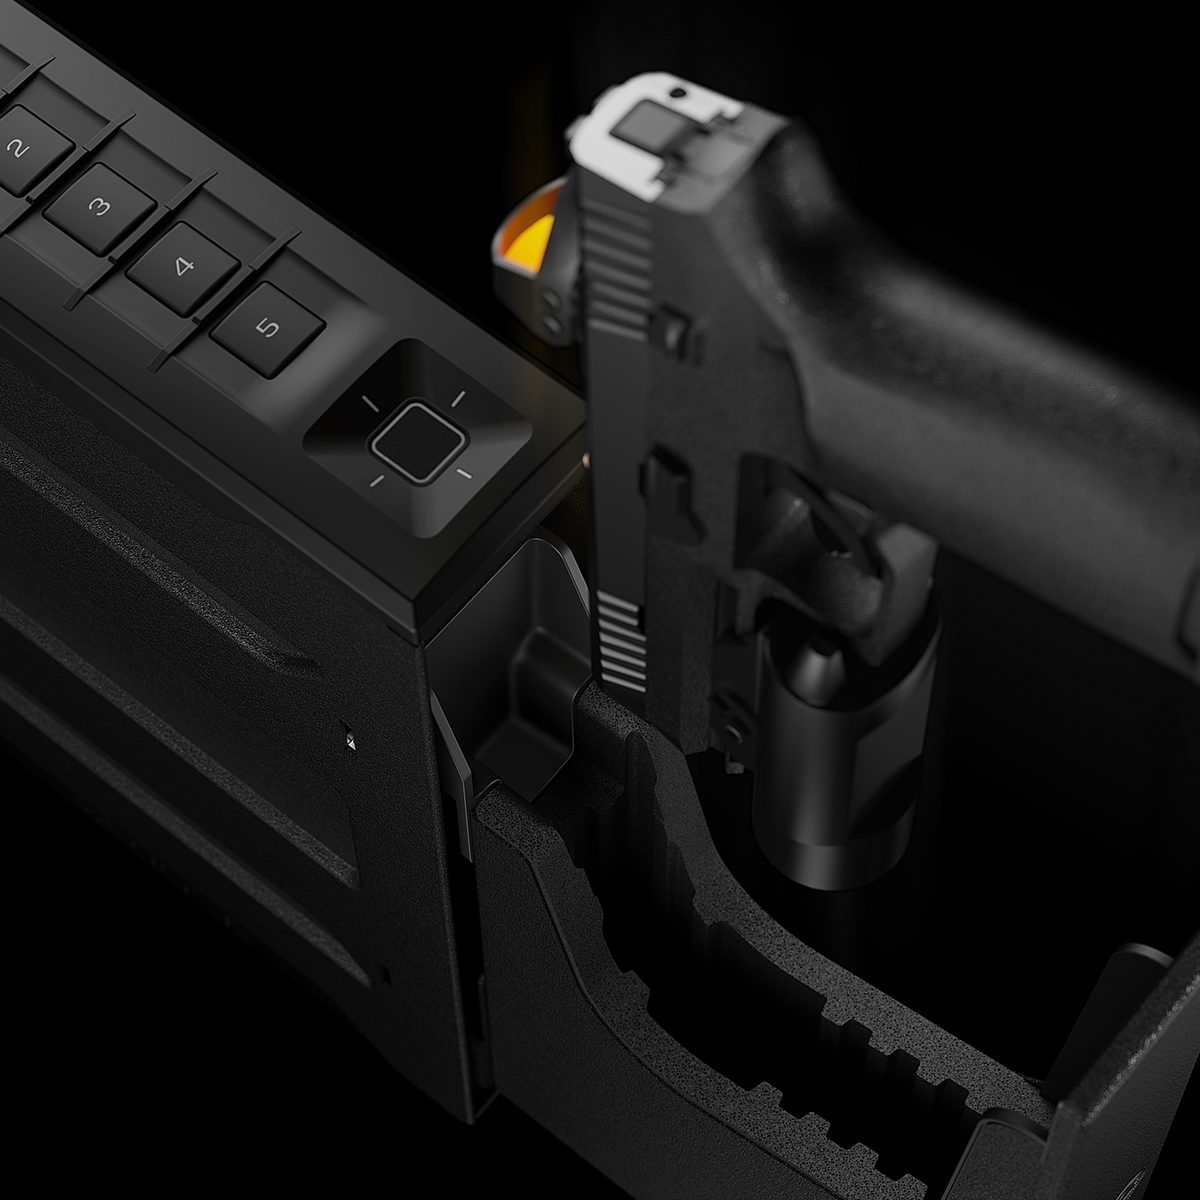 Vaultek SR20i Colion Noir Edition Biometric &amp; Bluetooth 2.0 Slider Handgun Safe Open with Pistol Out